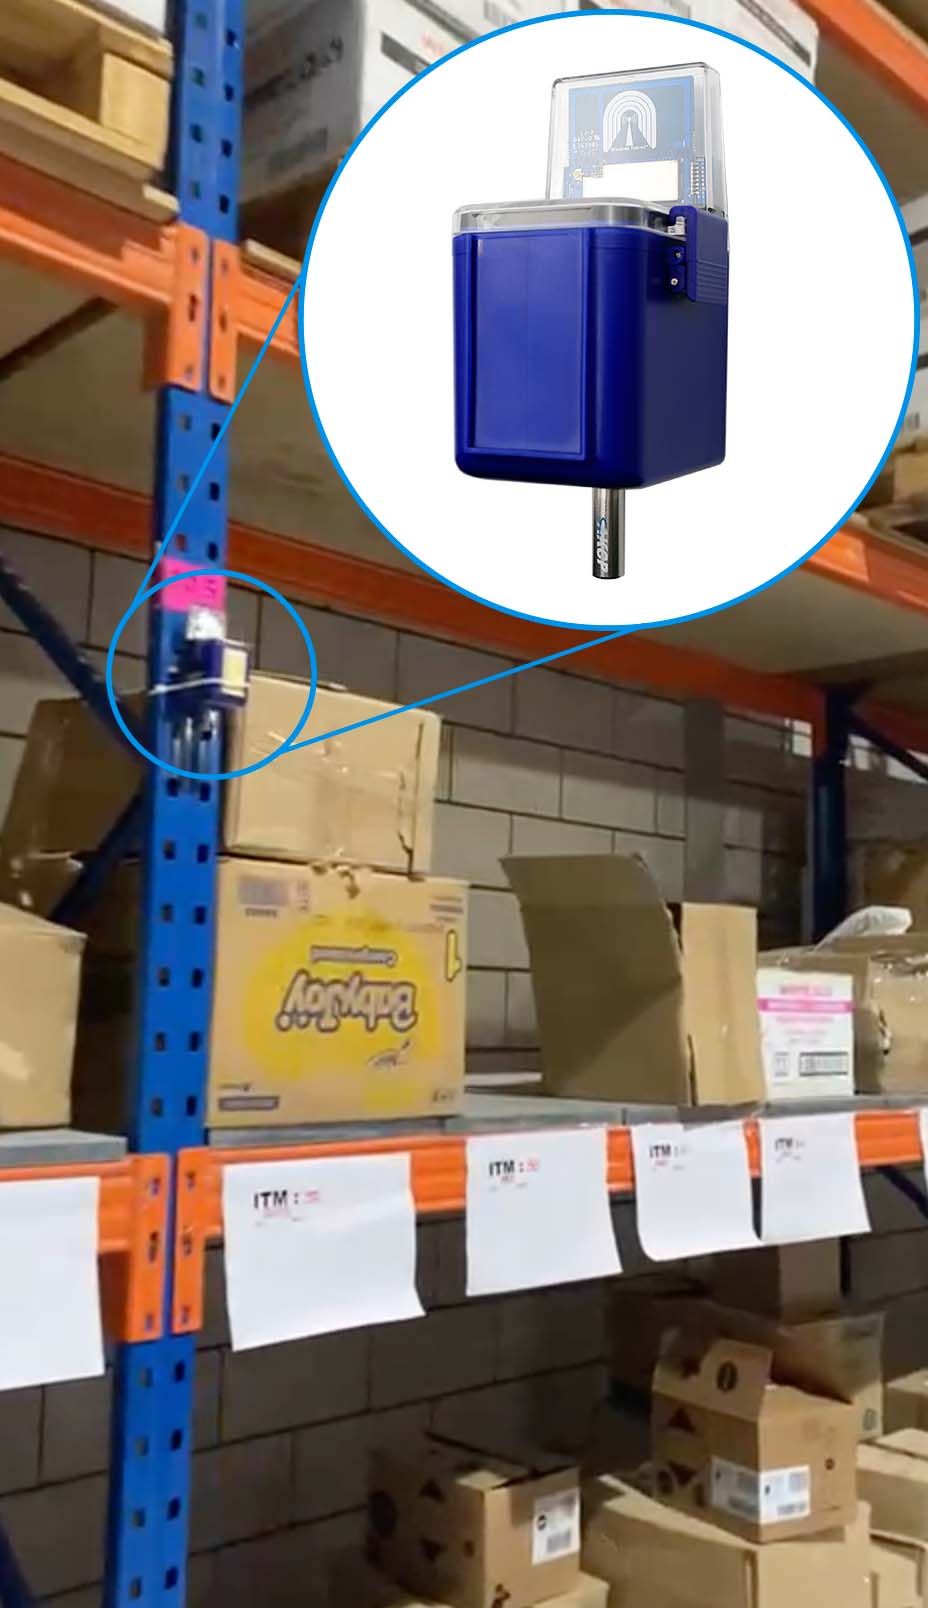 AKCP wireless temperature sensor installed in Saudi FDA approved warehouse